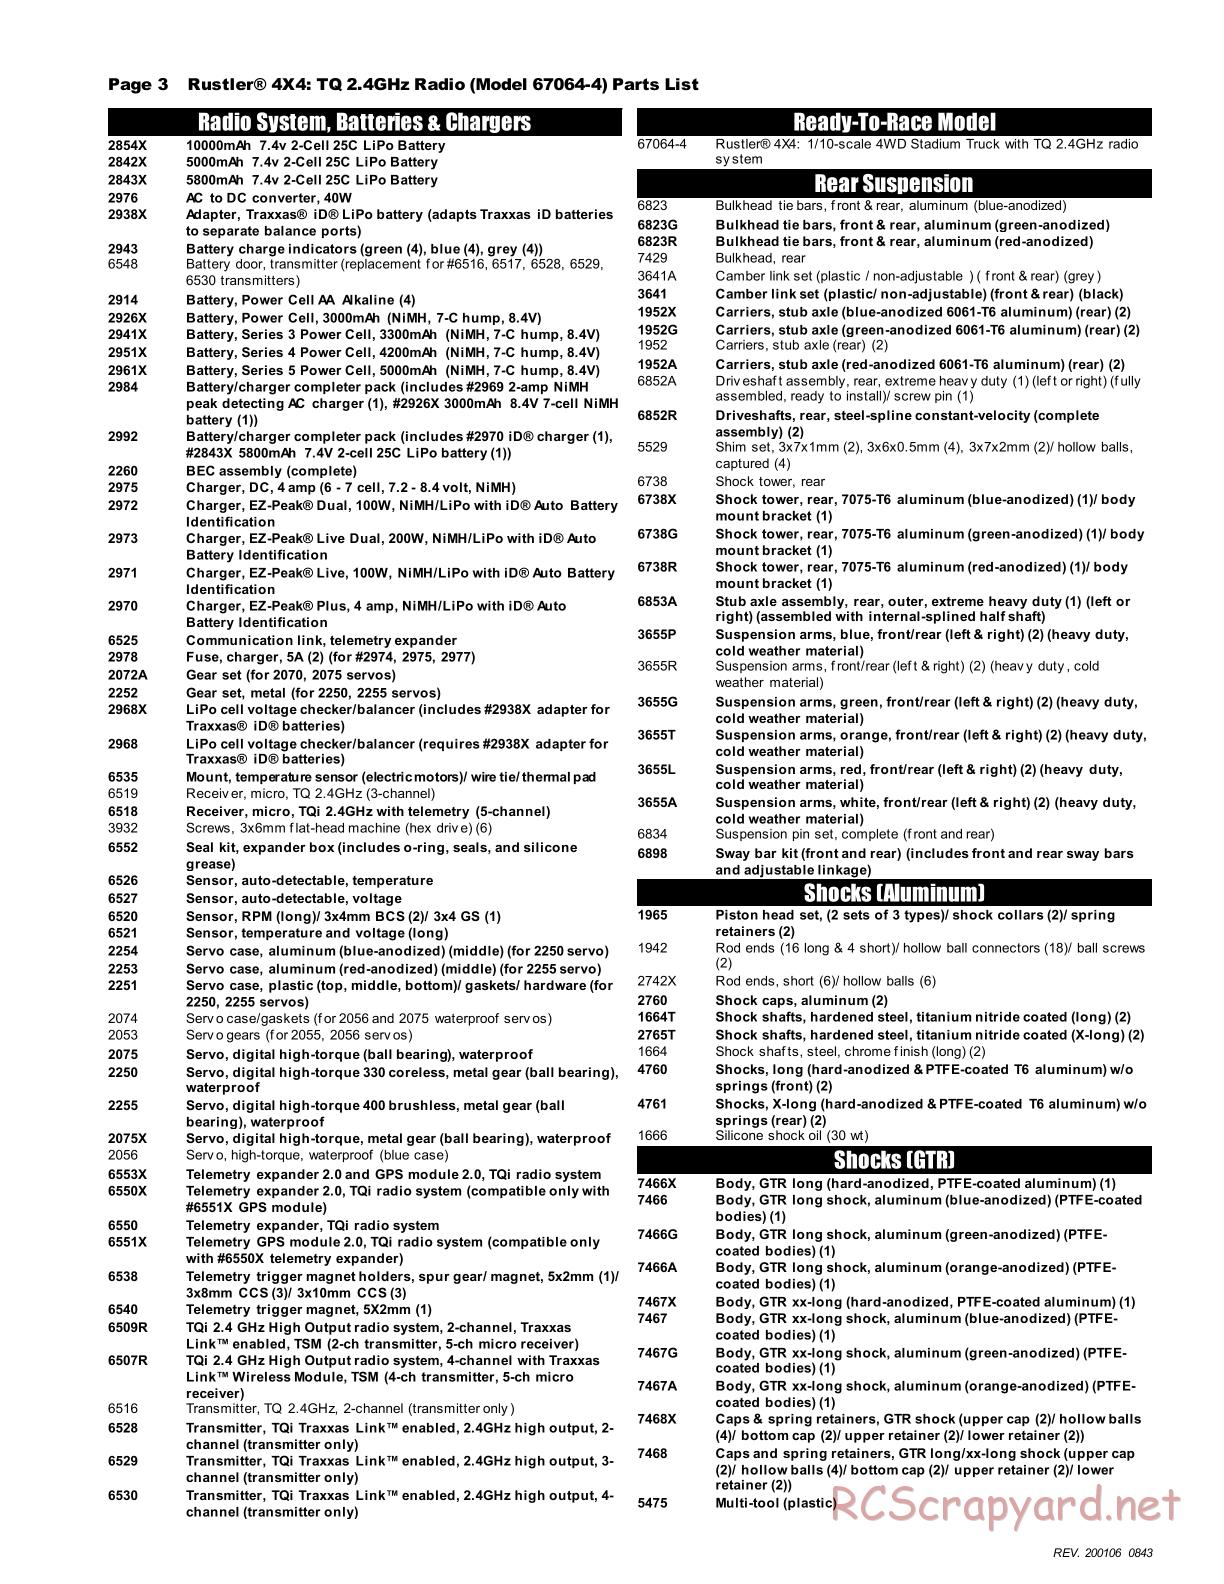 Traxxas - Rustler 4x4 XL-5 (2018) - Parts List - Page 3